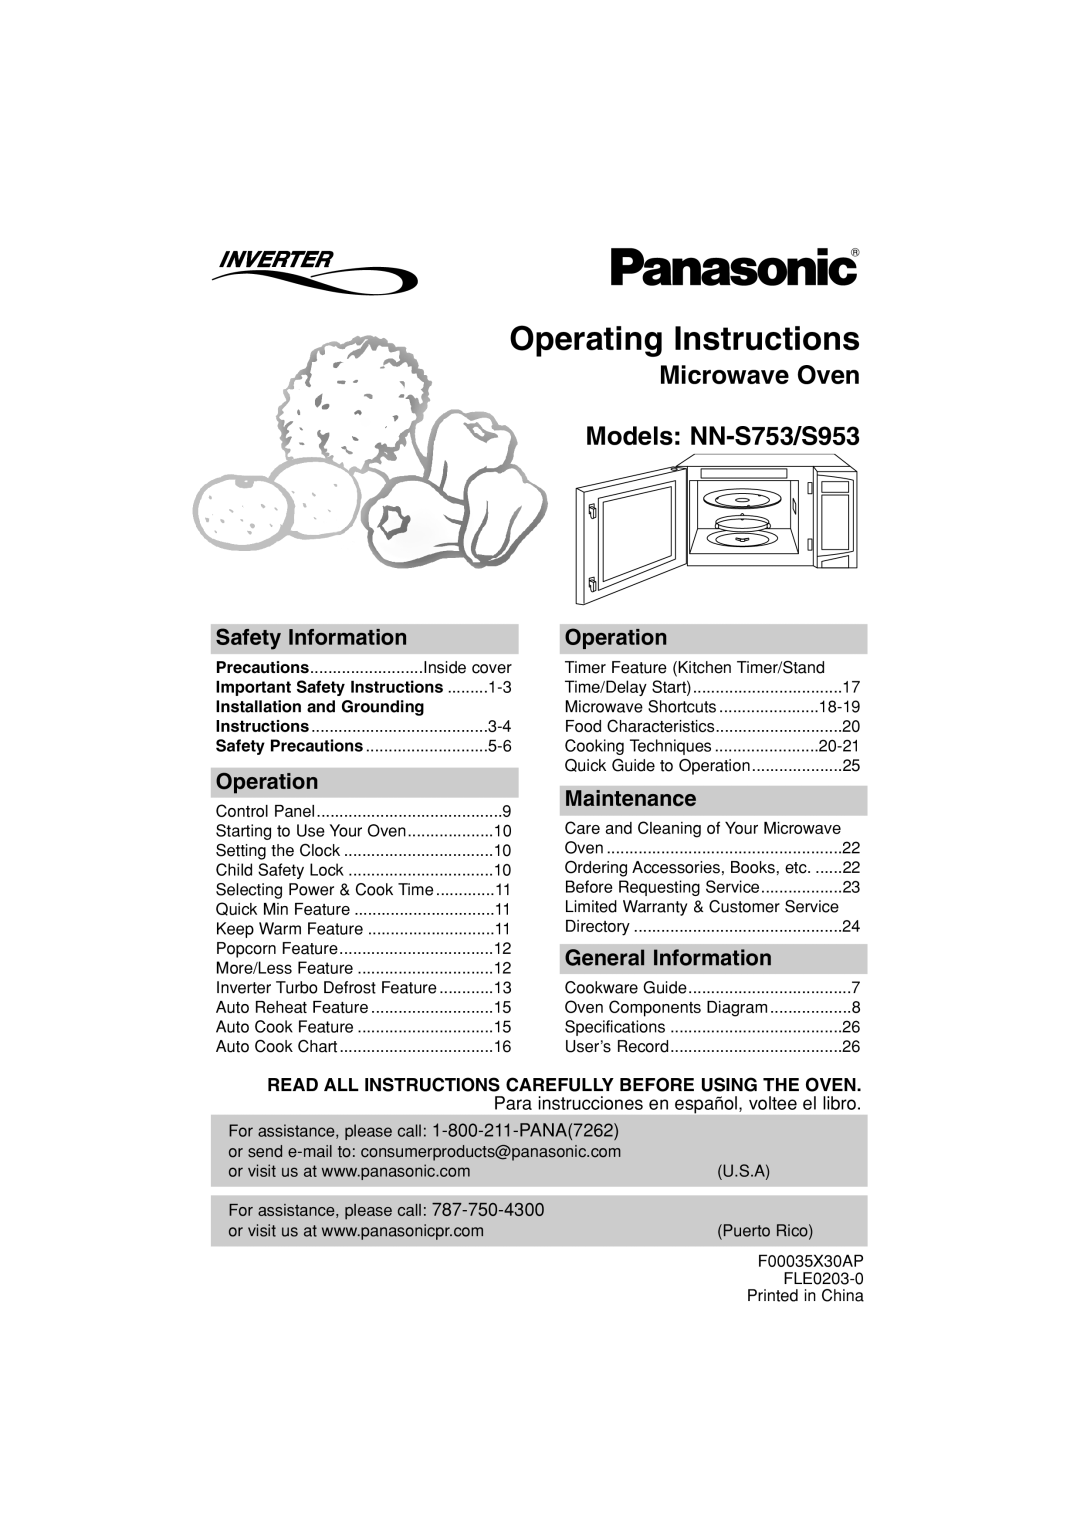 Panasonic NN-S953 operating instructions Operating Instructions, Microwave Oven Models NN-S753/S953, Safety Information 